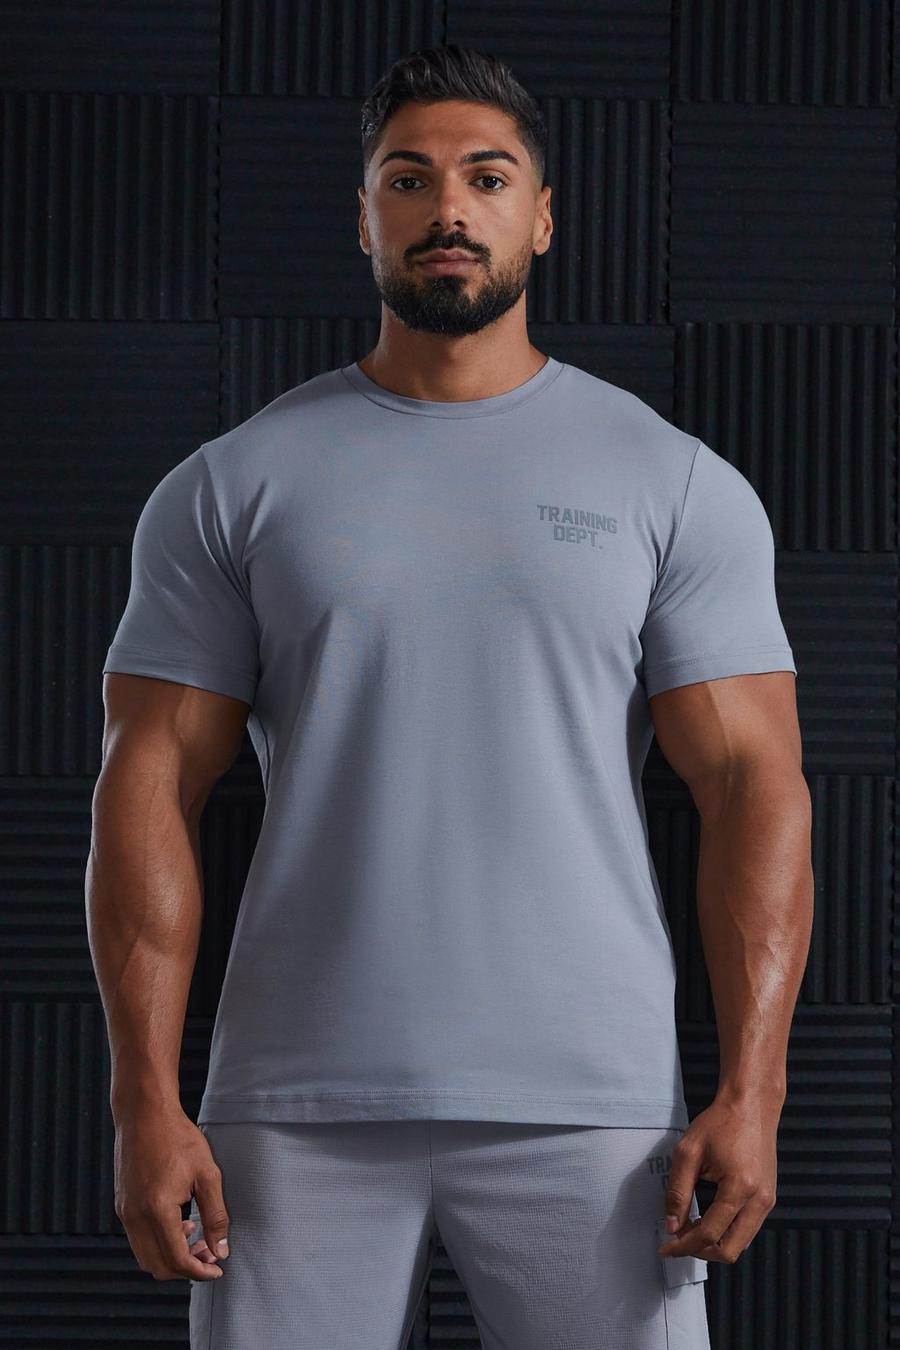 Active Training Dept Performance T-Shirt, Light grey